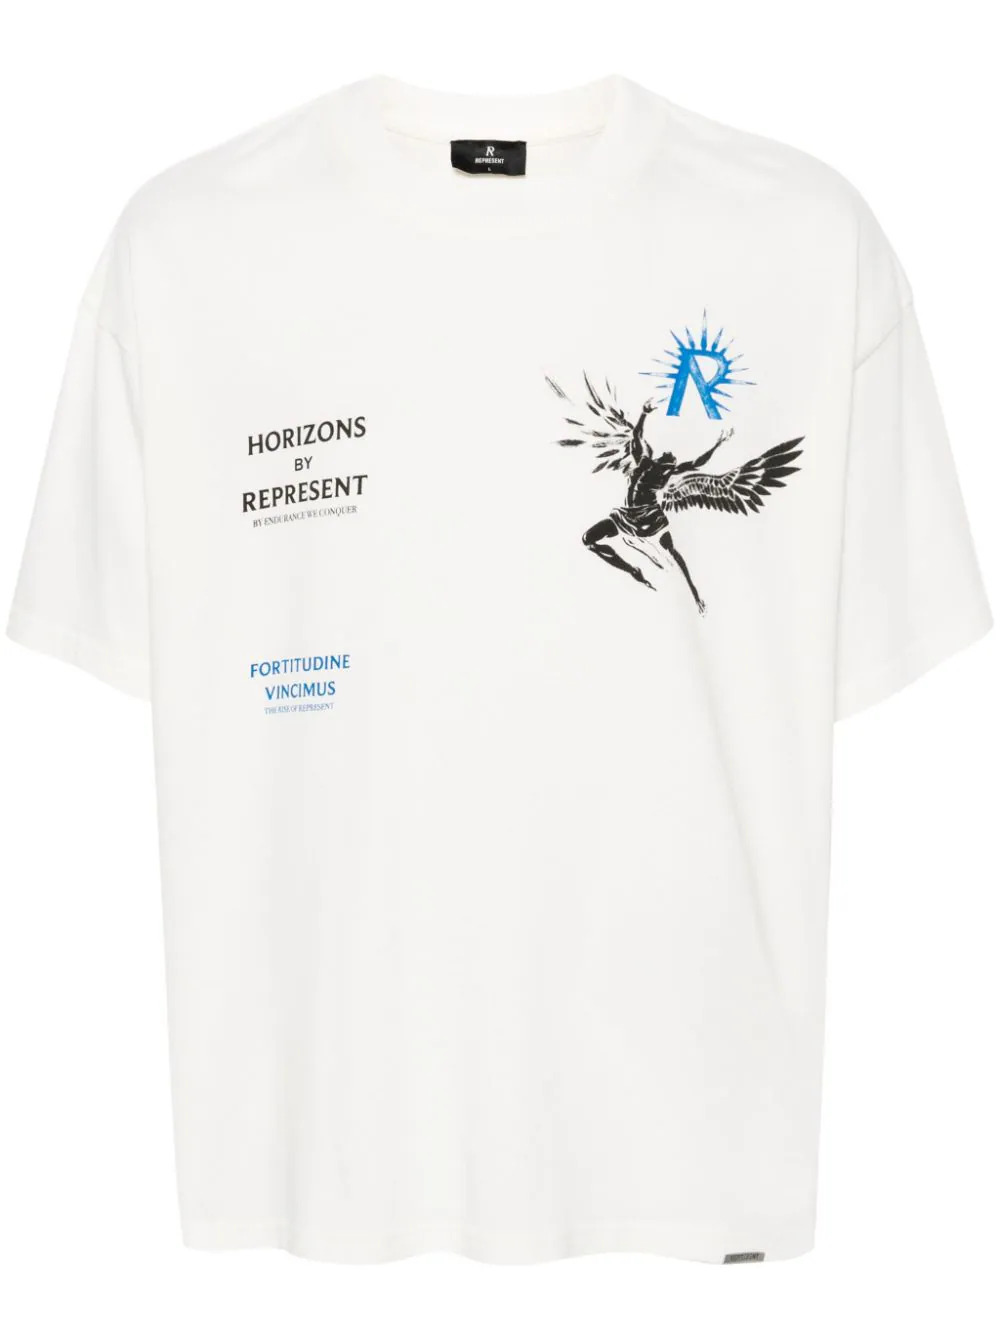 Icarus T-Shirt